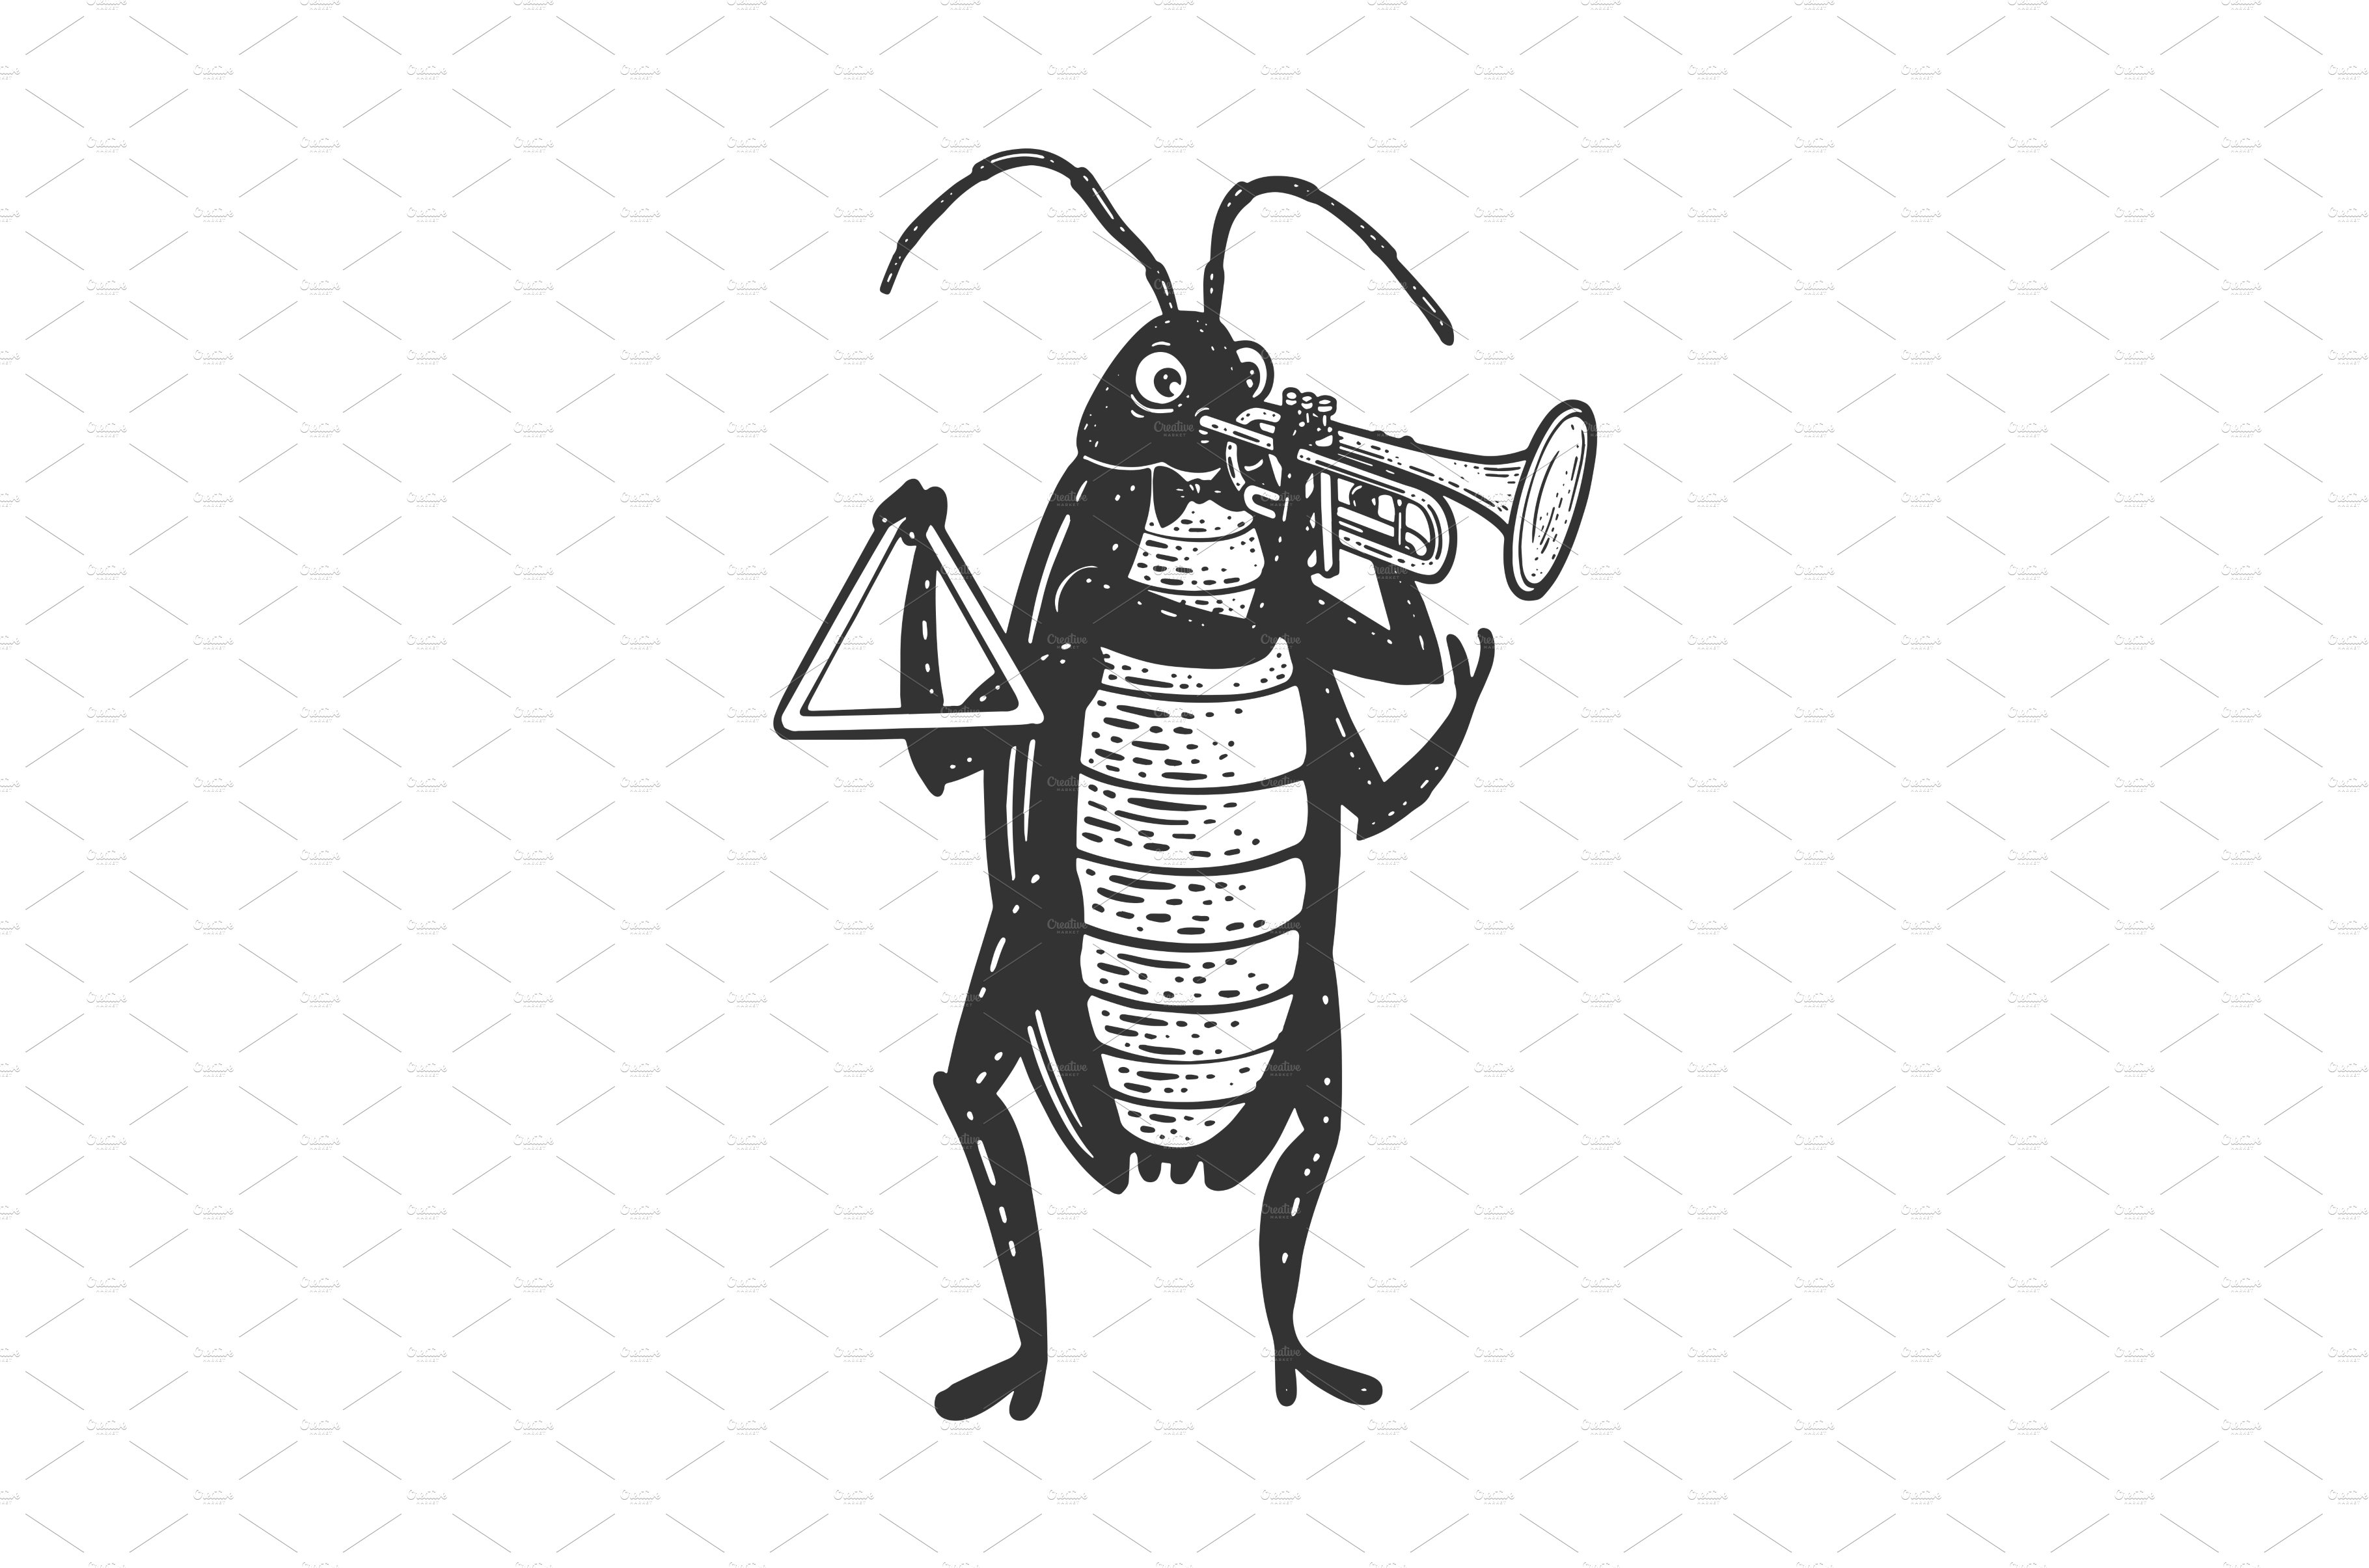 Cockroach trumpet sketch vector cover image.